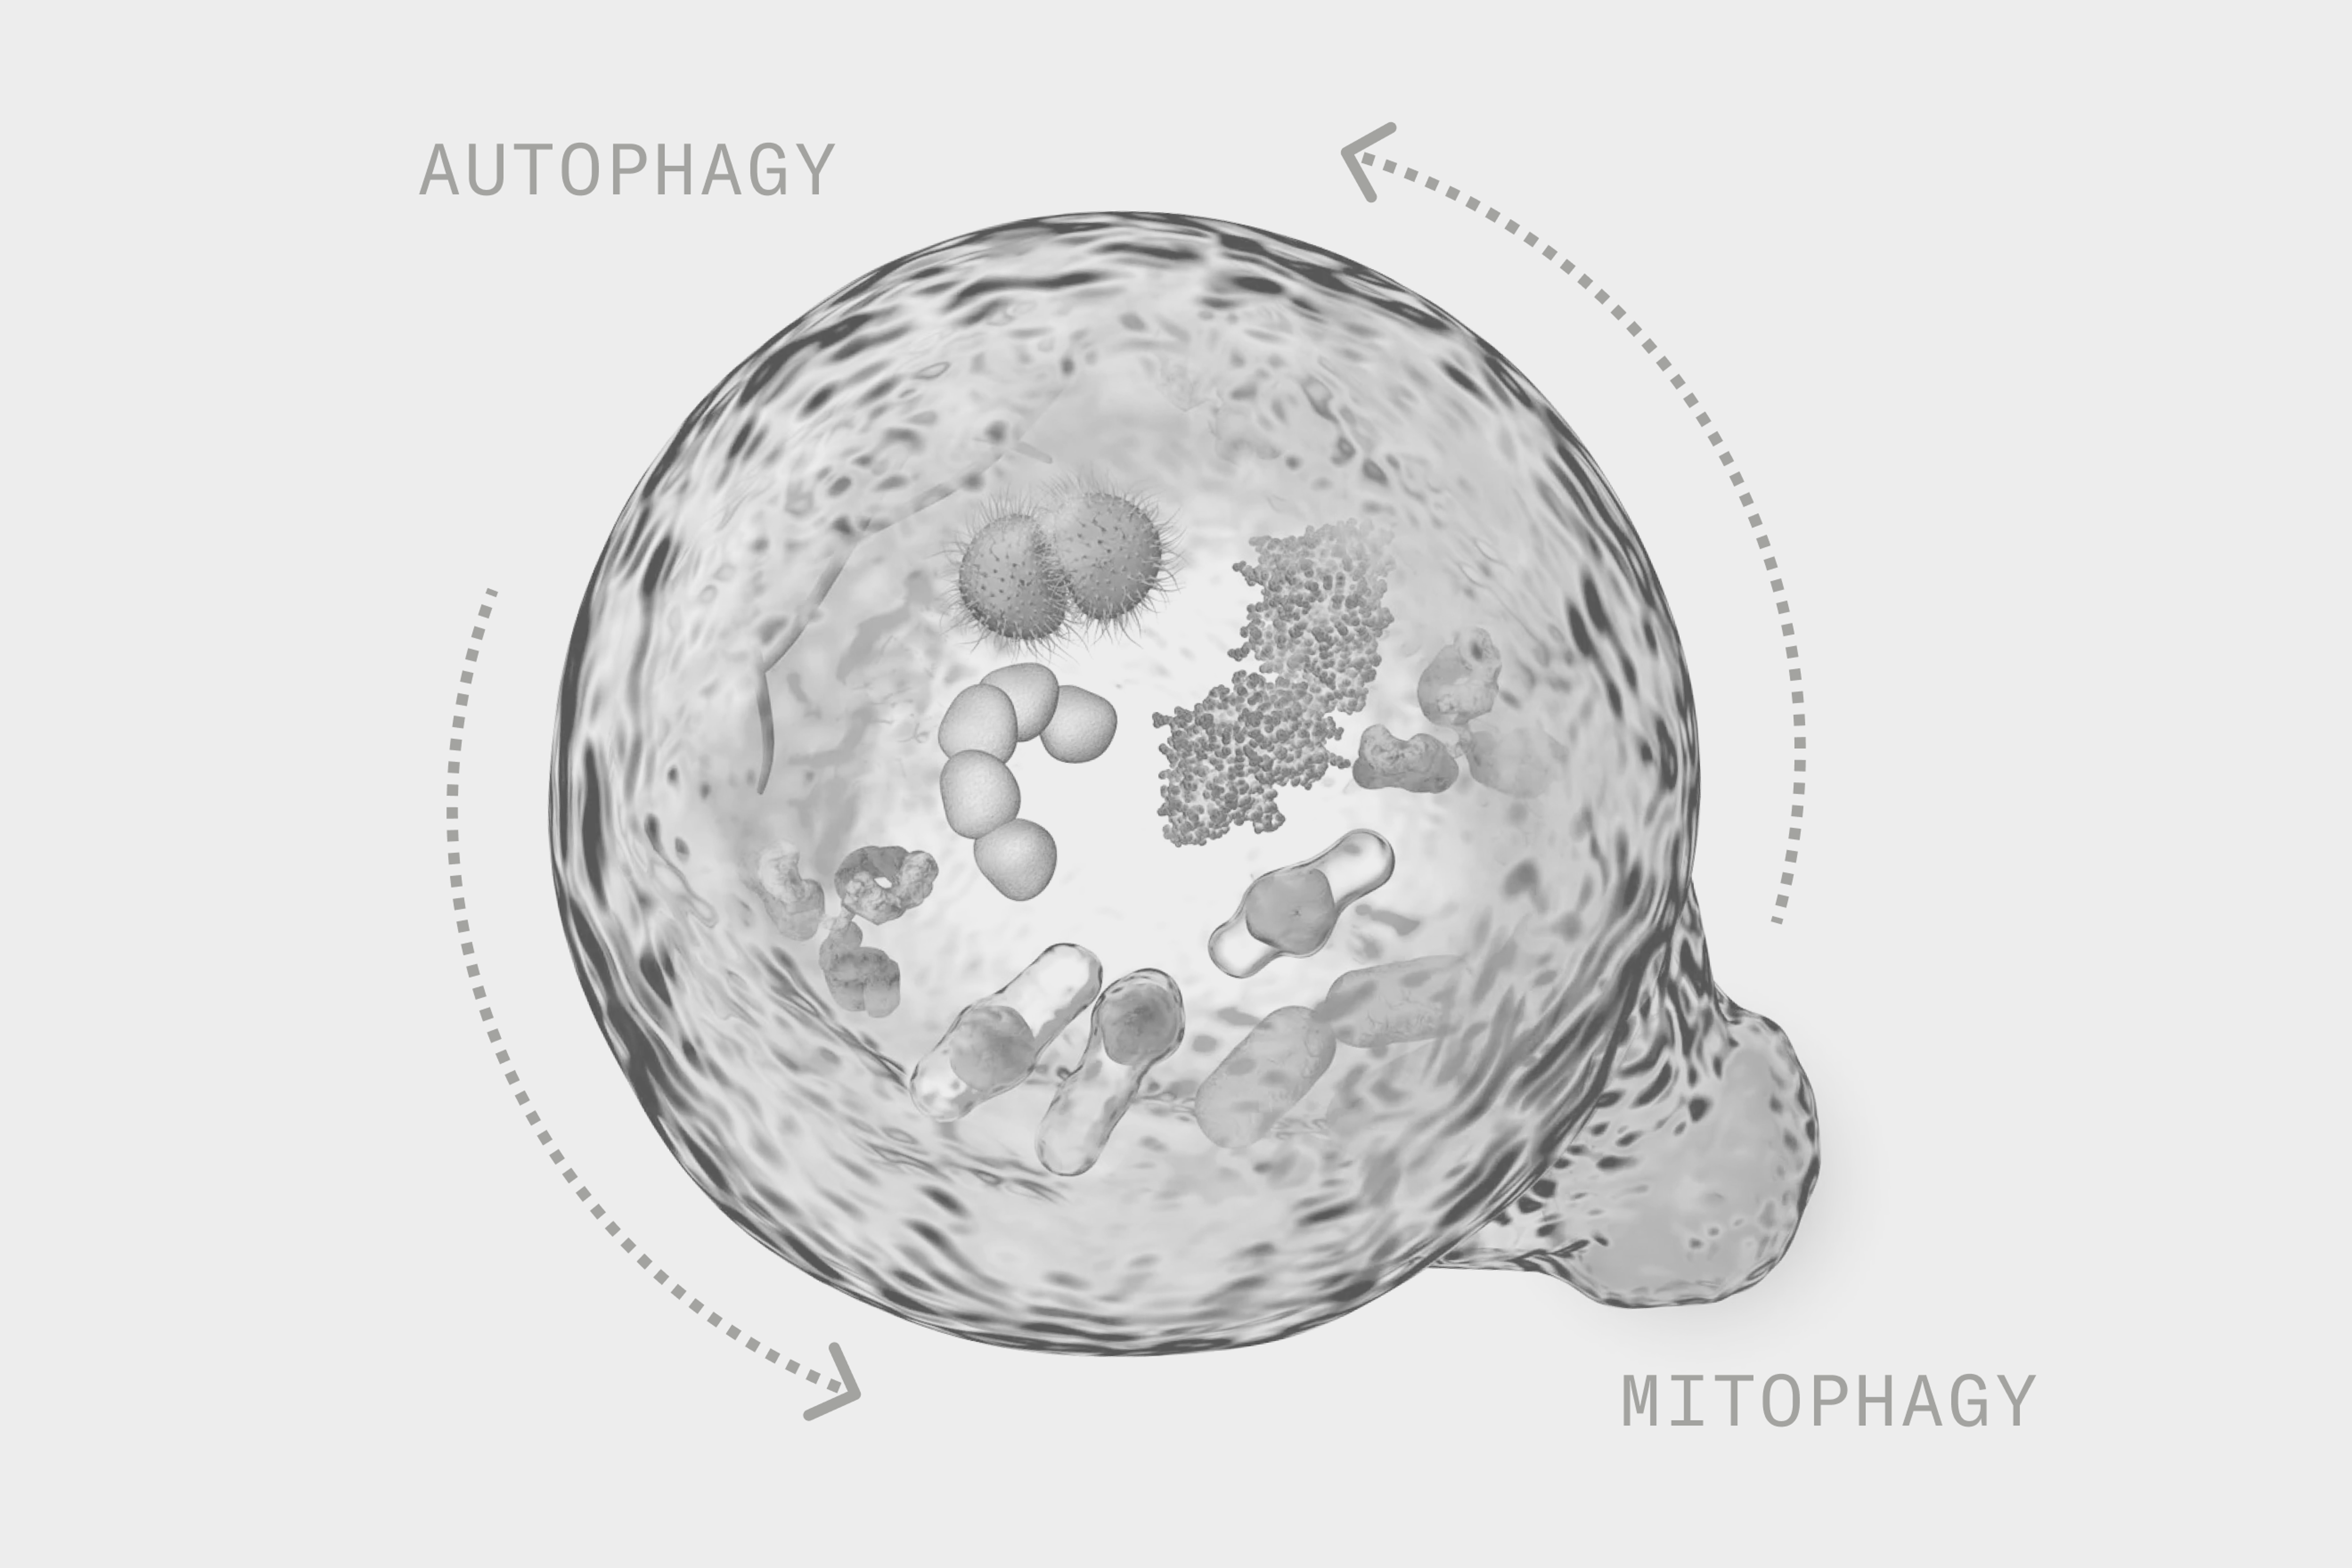 Autophagy vs mitophagy